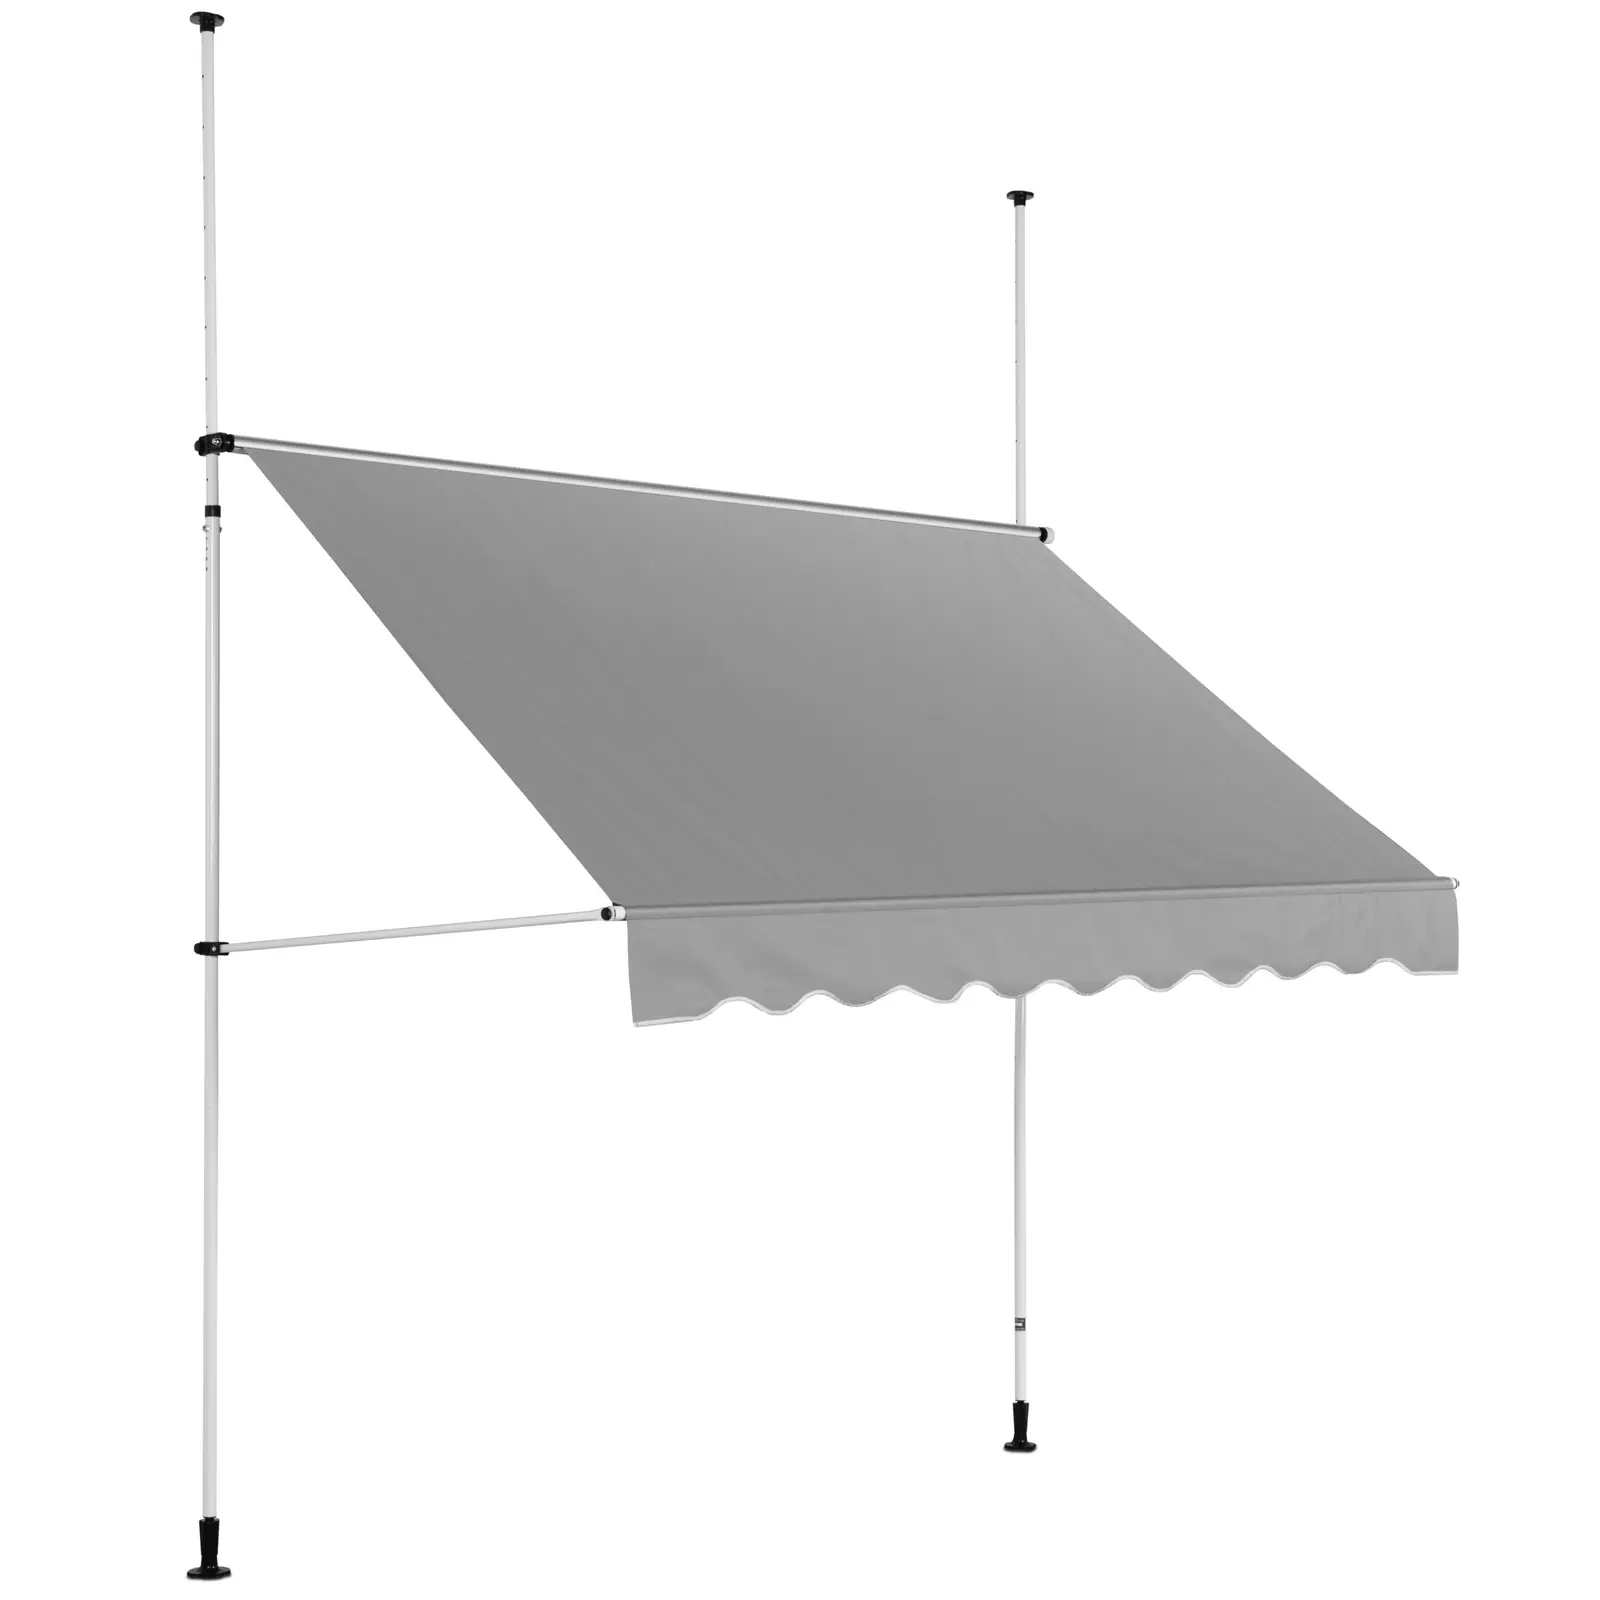 Klemluifel - 2 - 3,1 m - 250 x 120 cm - UV-bestendig - antracietgrijs/wit